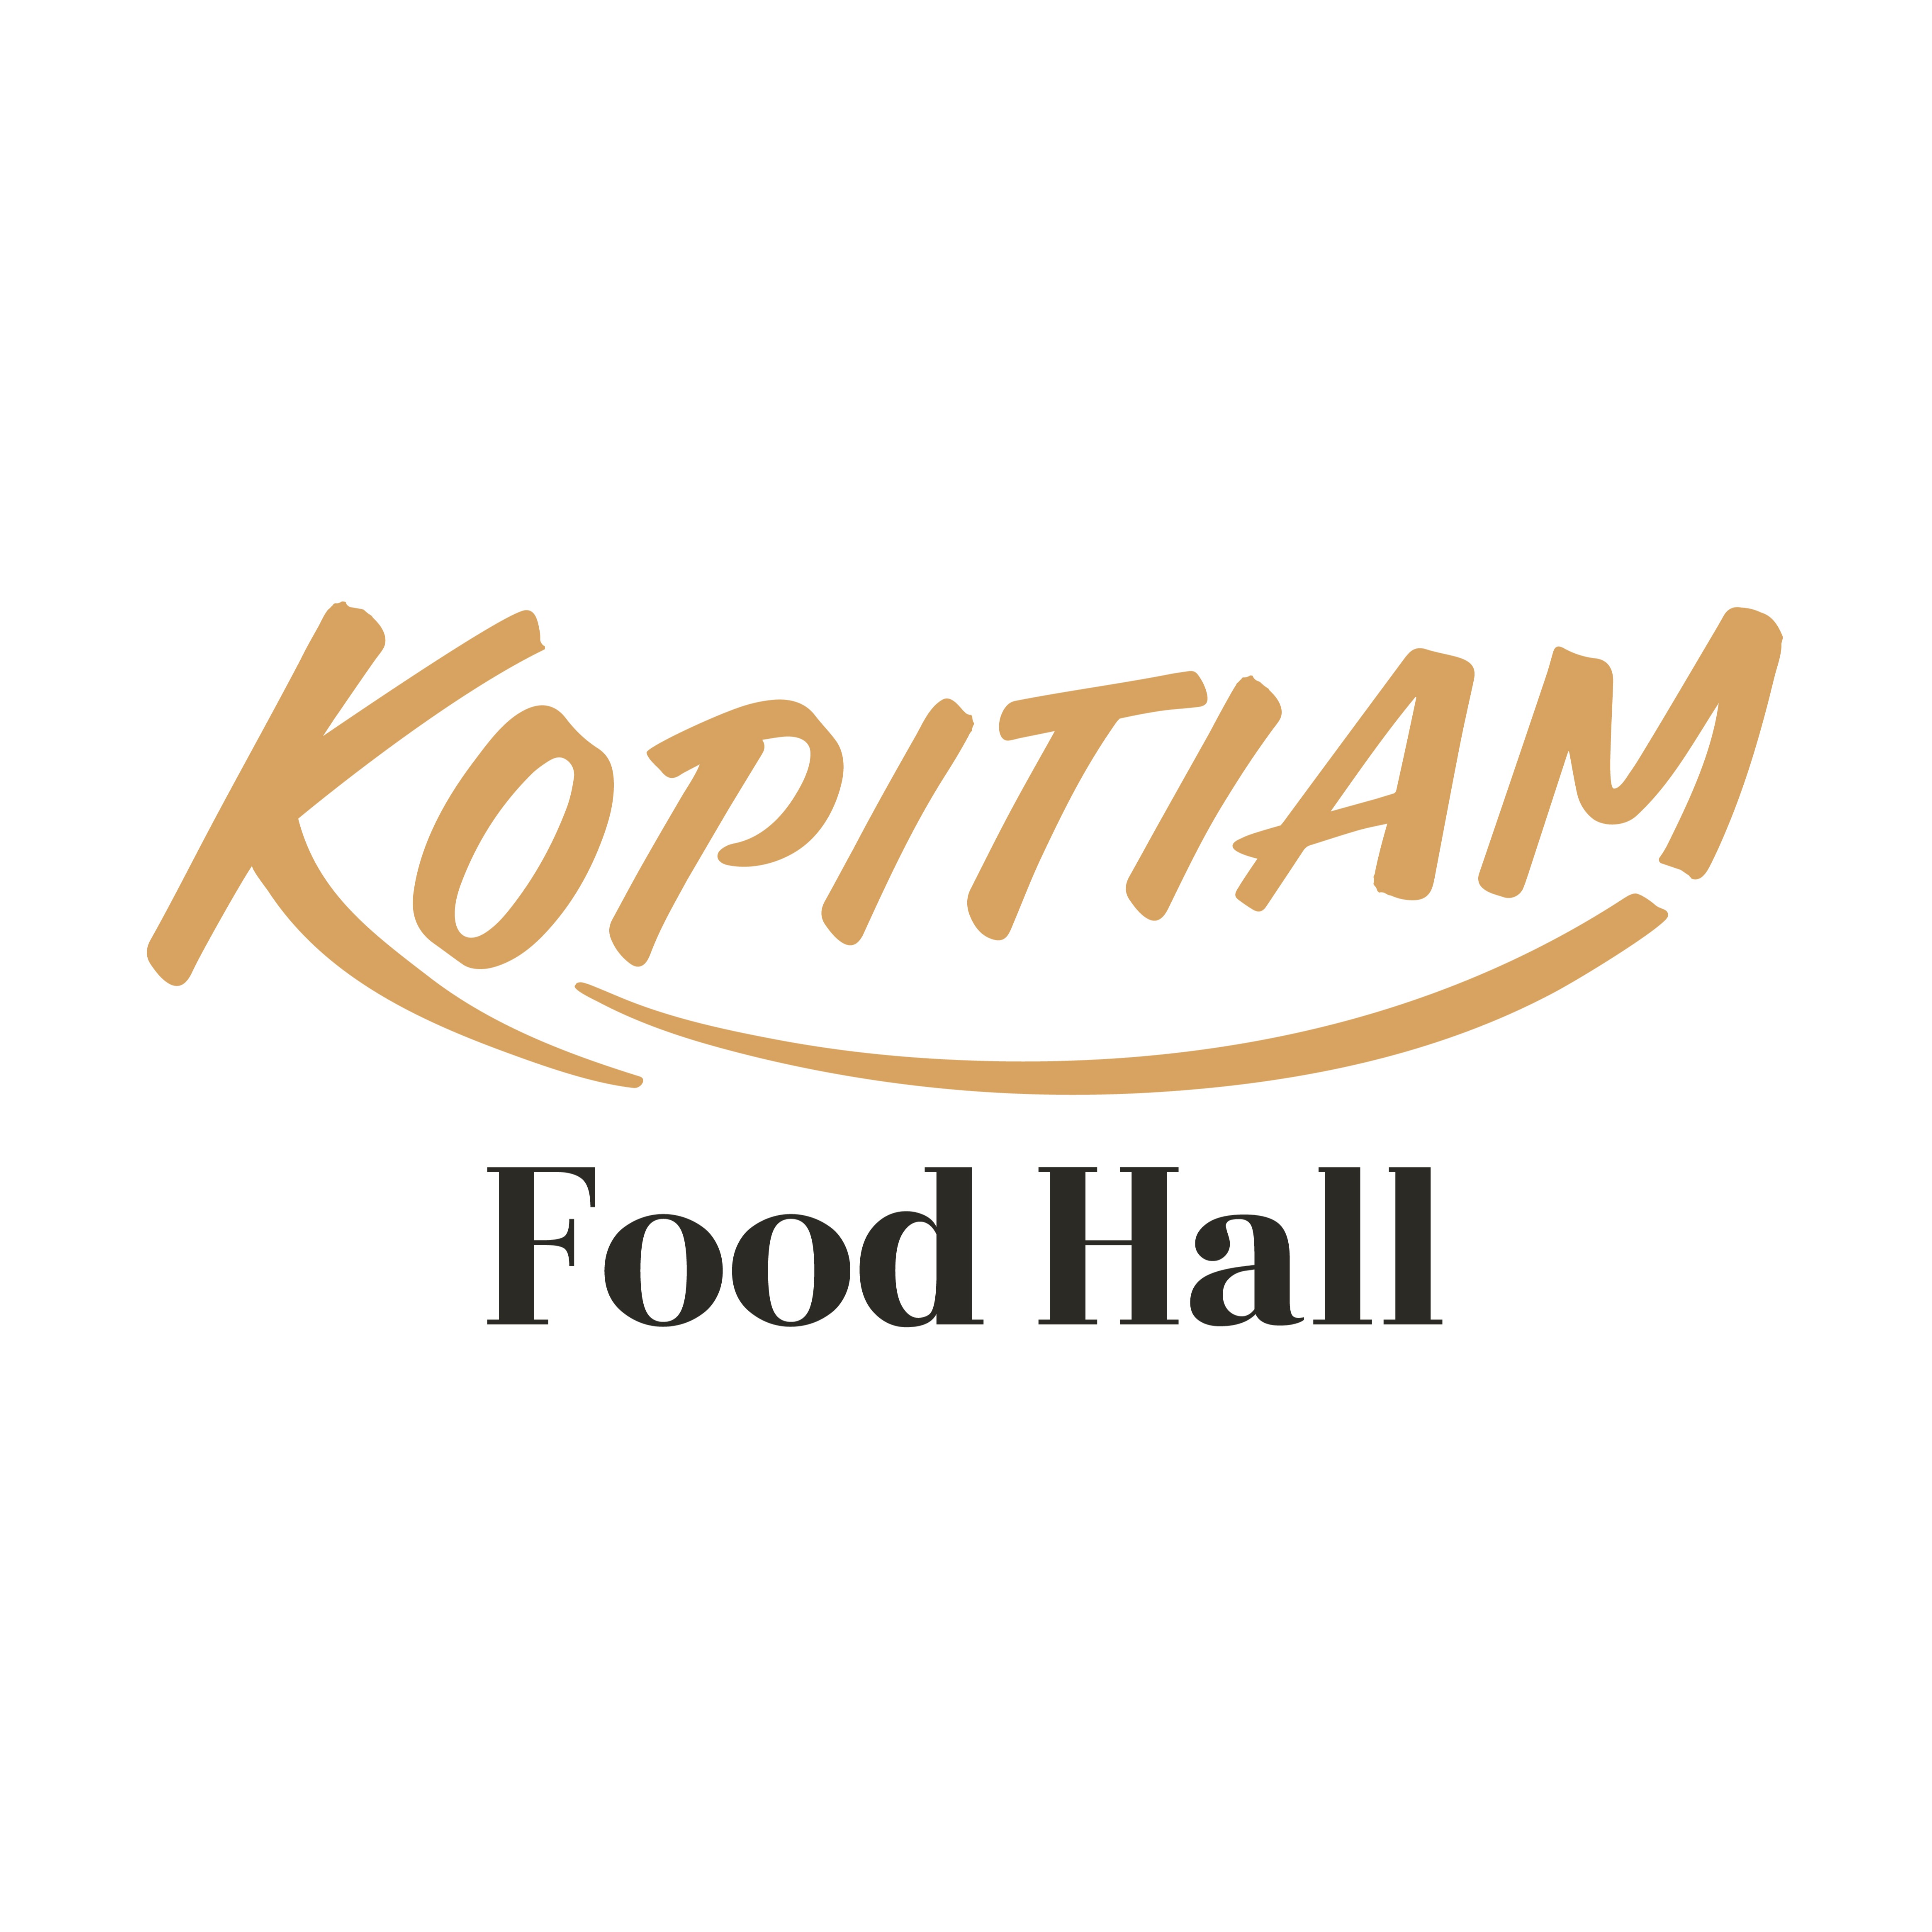 Kopitiam Food Hall logo at Jem, Jurong East